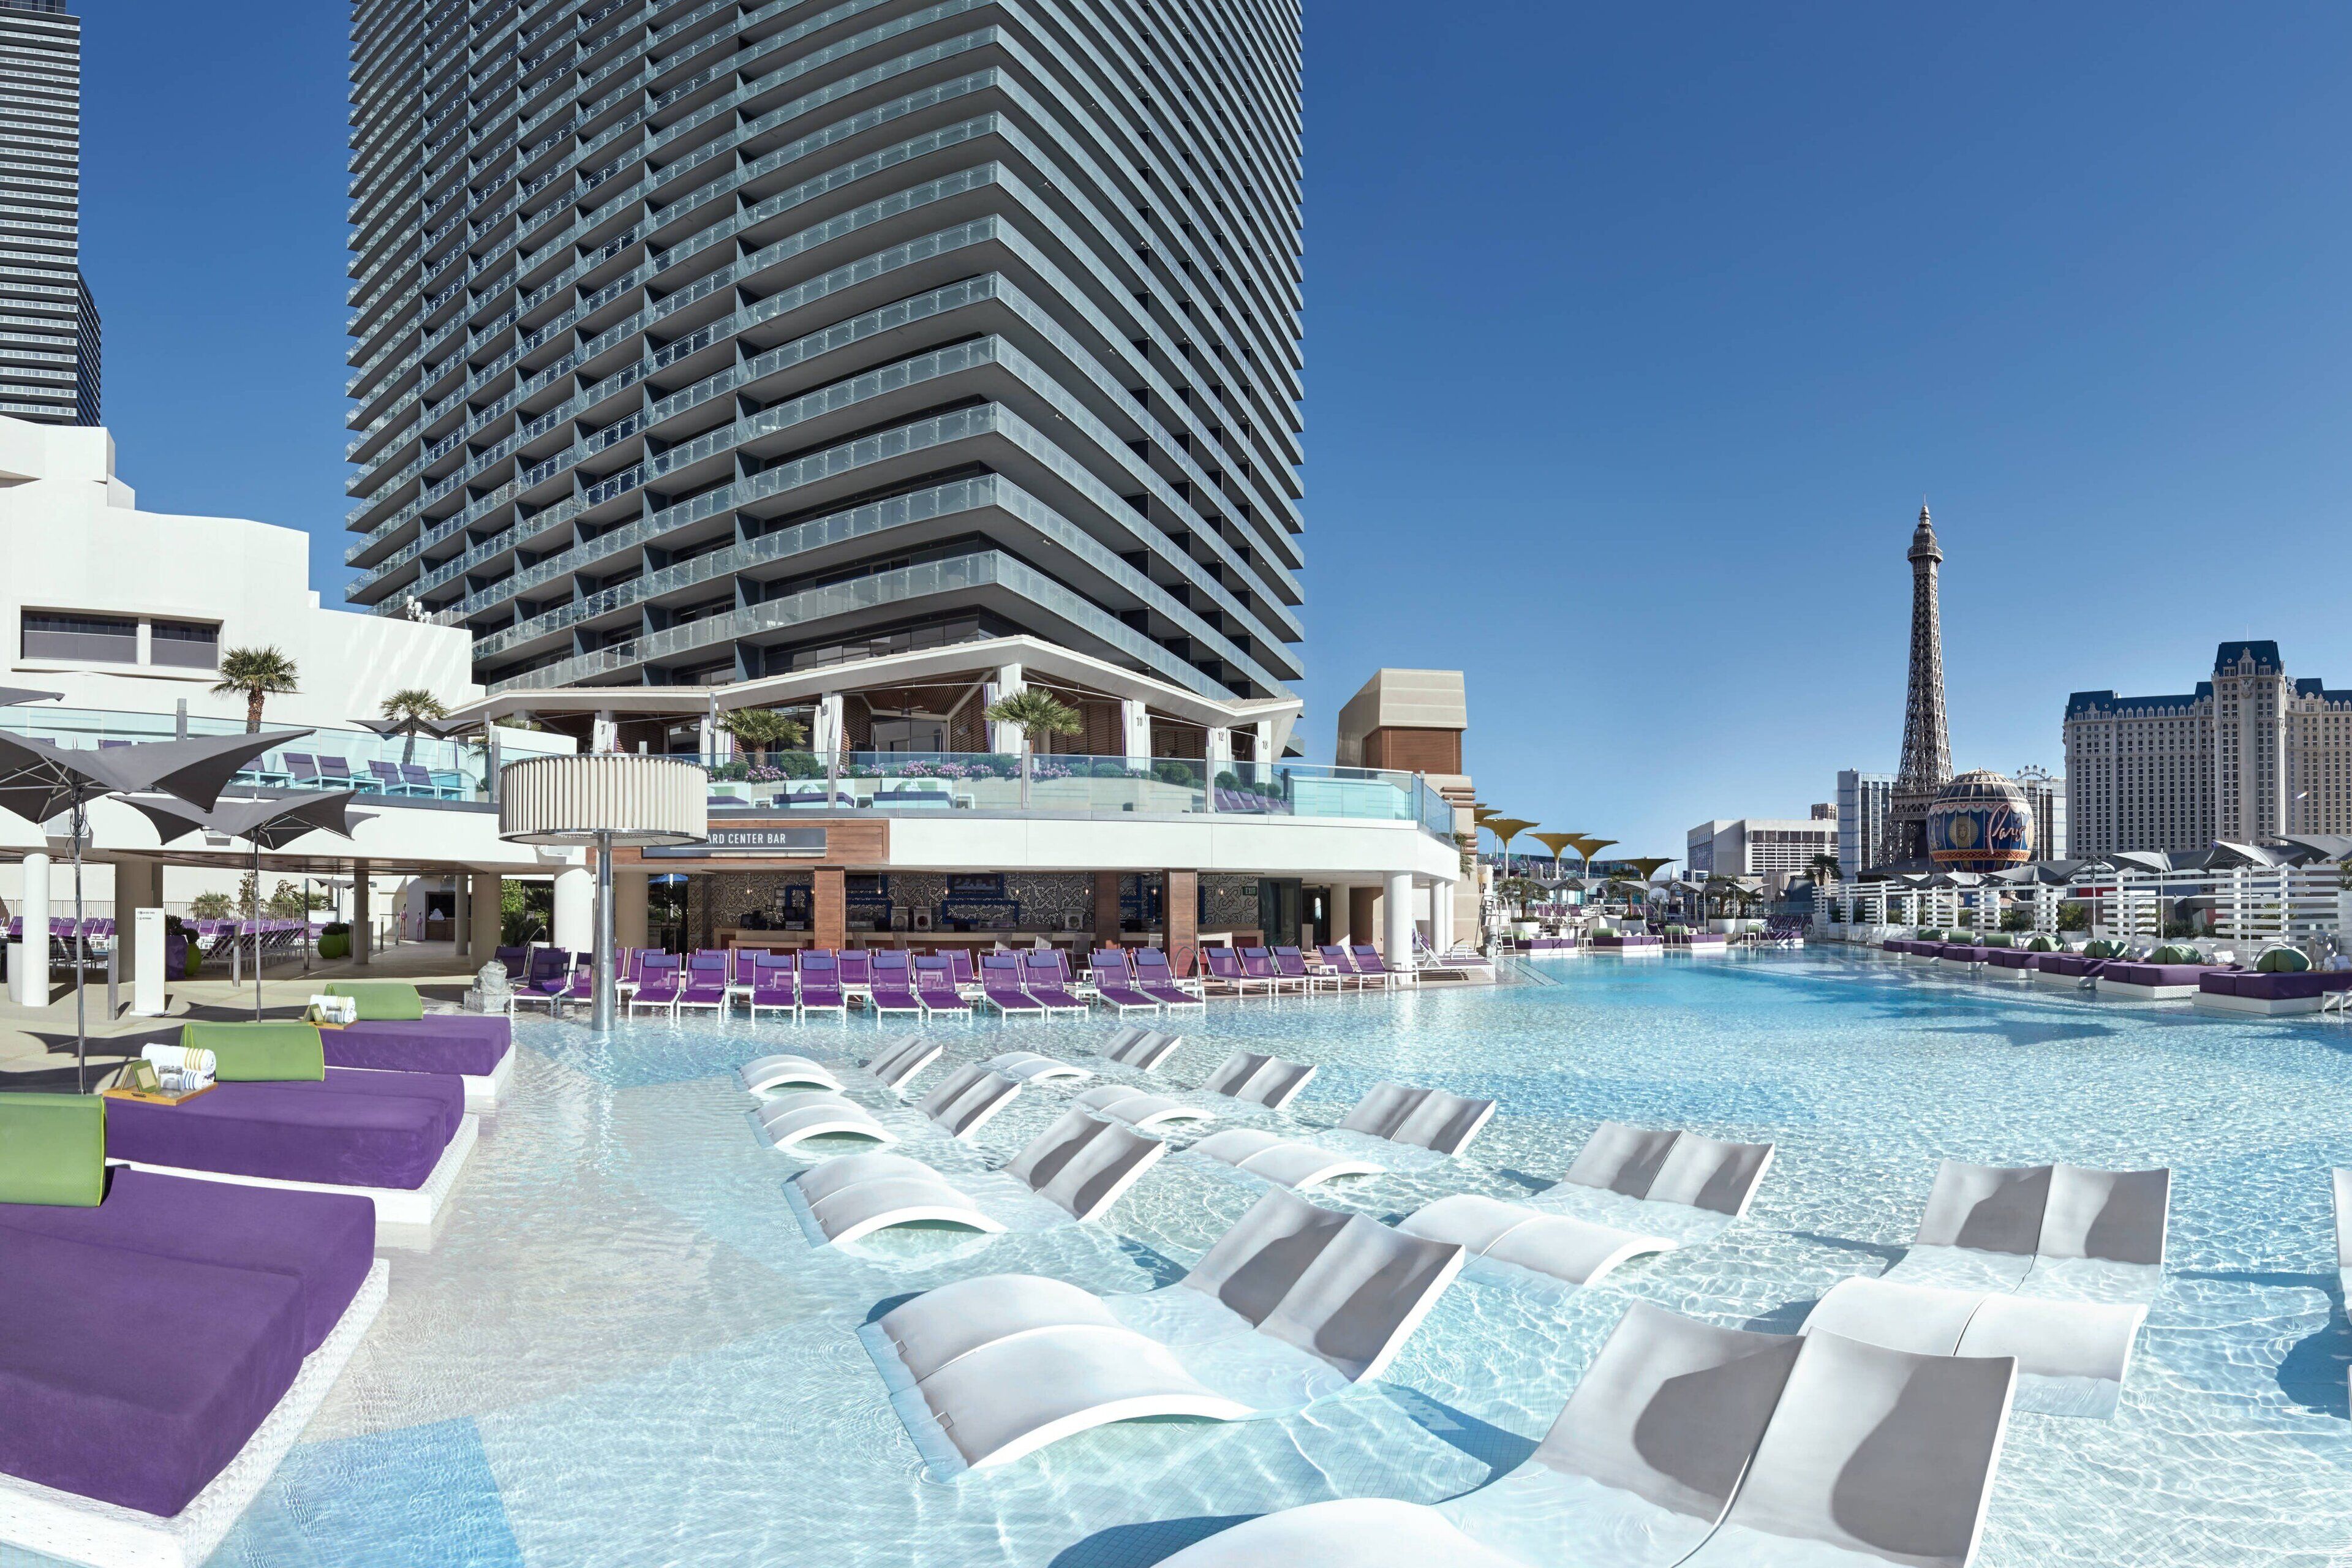 Pool view of The Cosmopolitan of Las Vegas